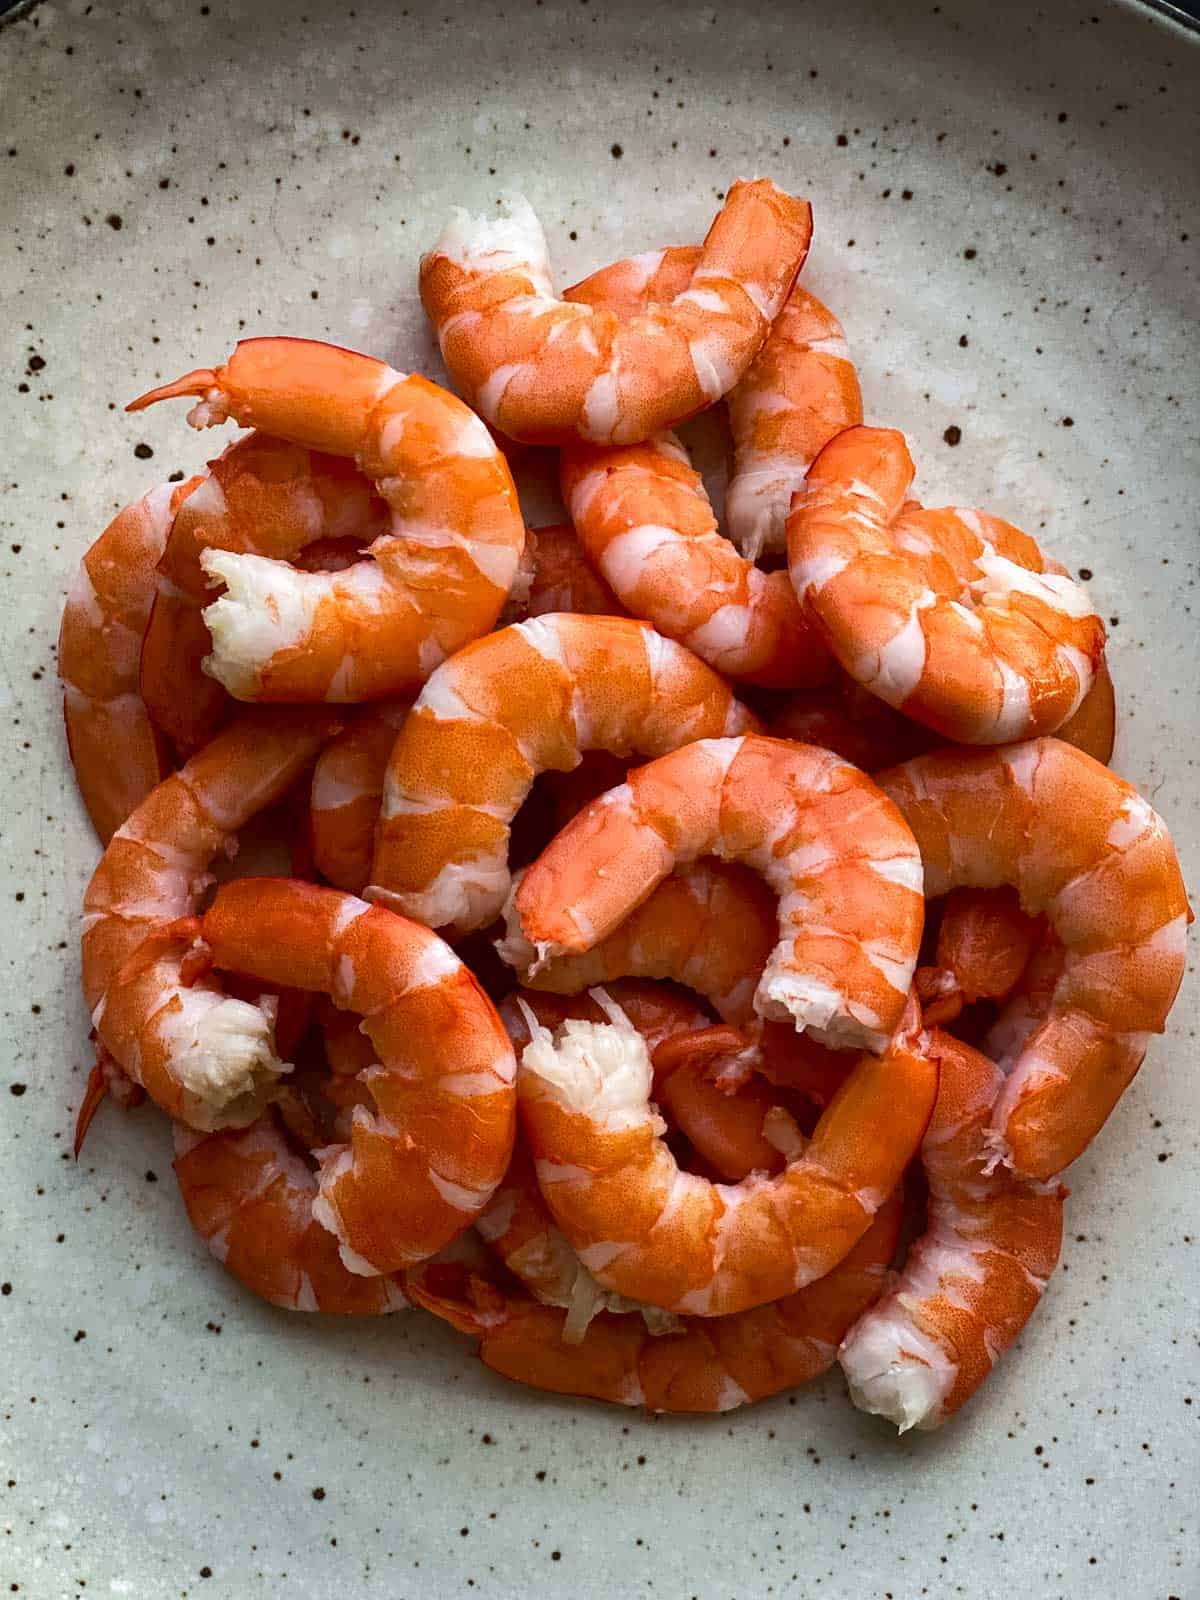 A heap of peeled prawns or shrimp on a grey plate